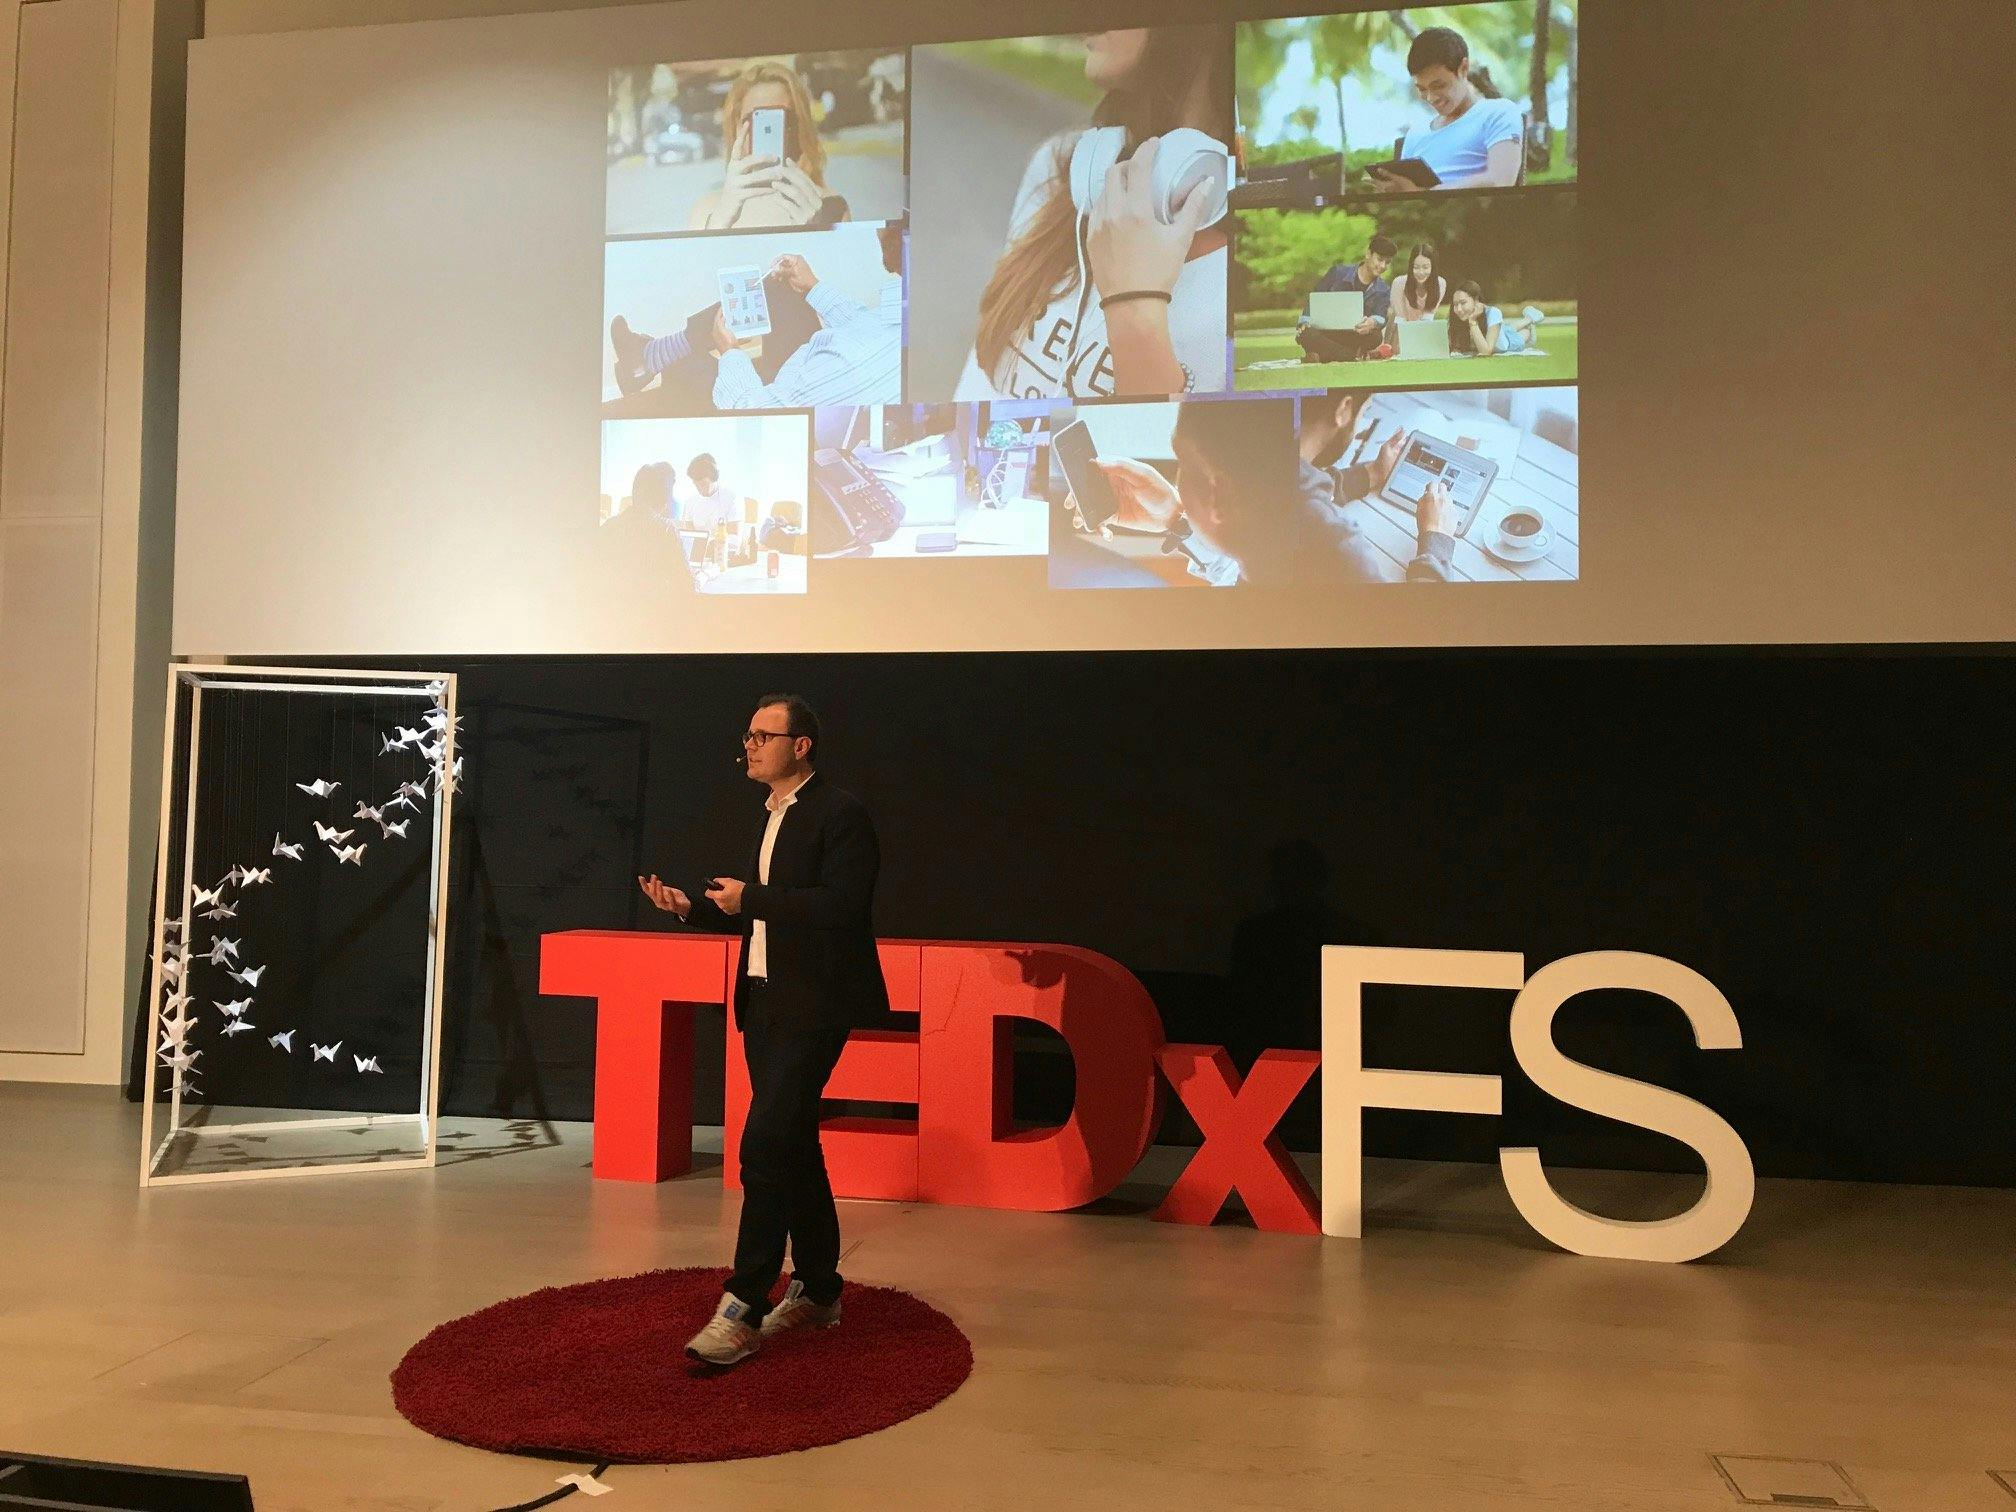 TEDxFS